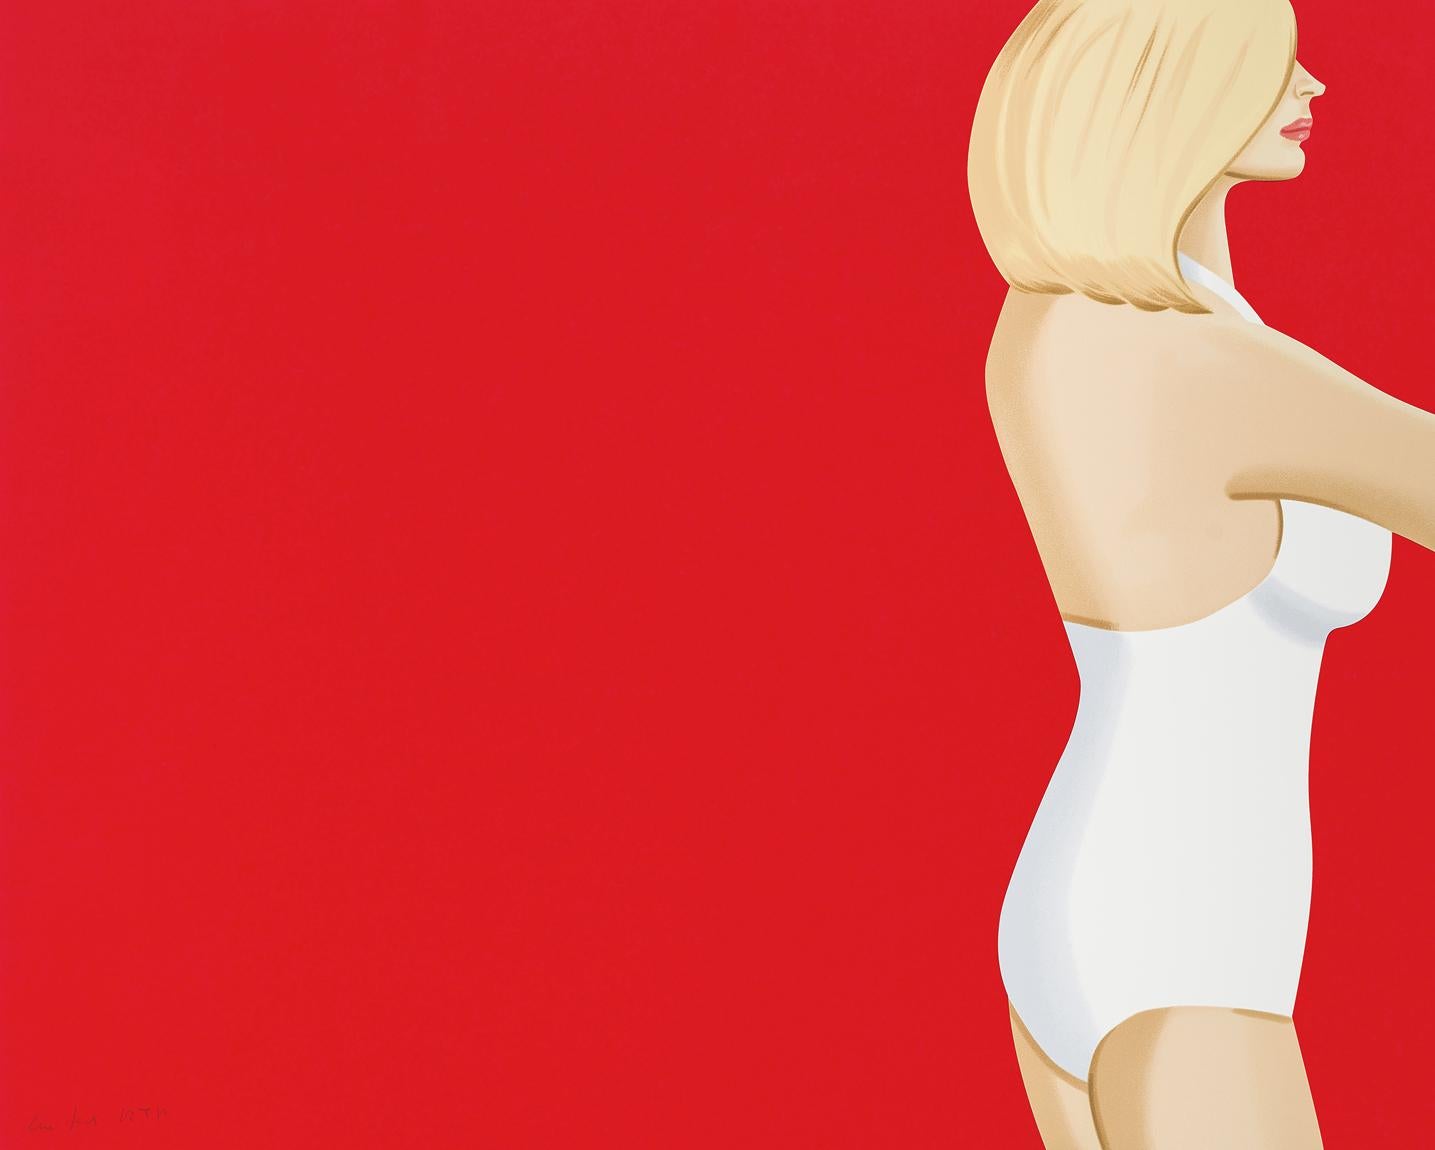 Coca-Cola Girl 3 - 21st Century, Contemporary, Alex Katz, Swim Suit, Woman, Red